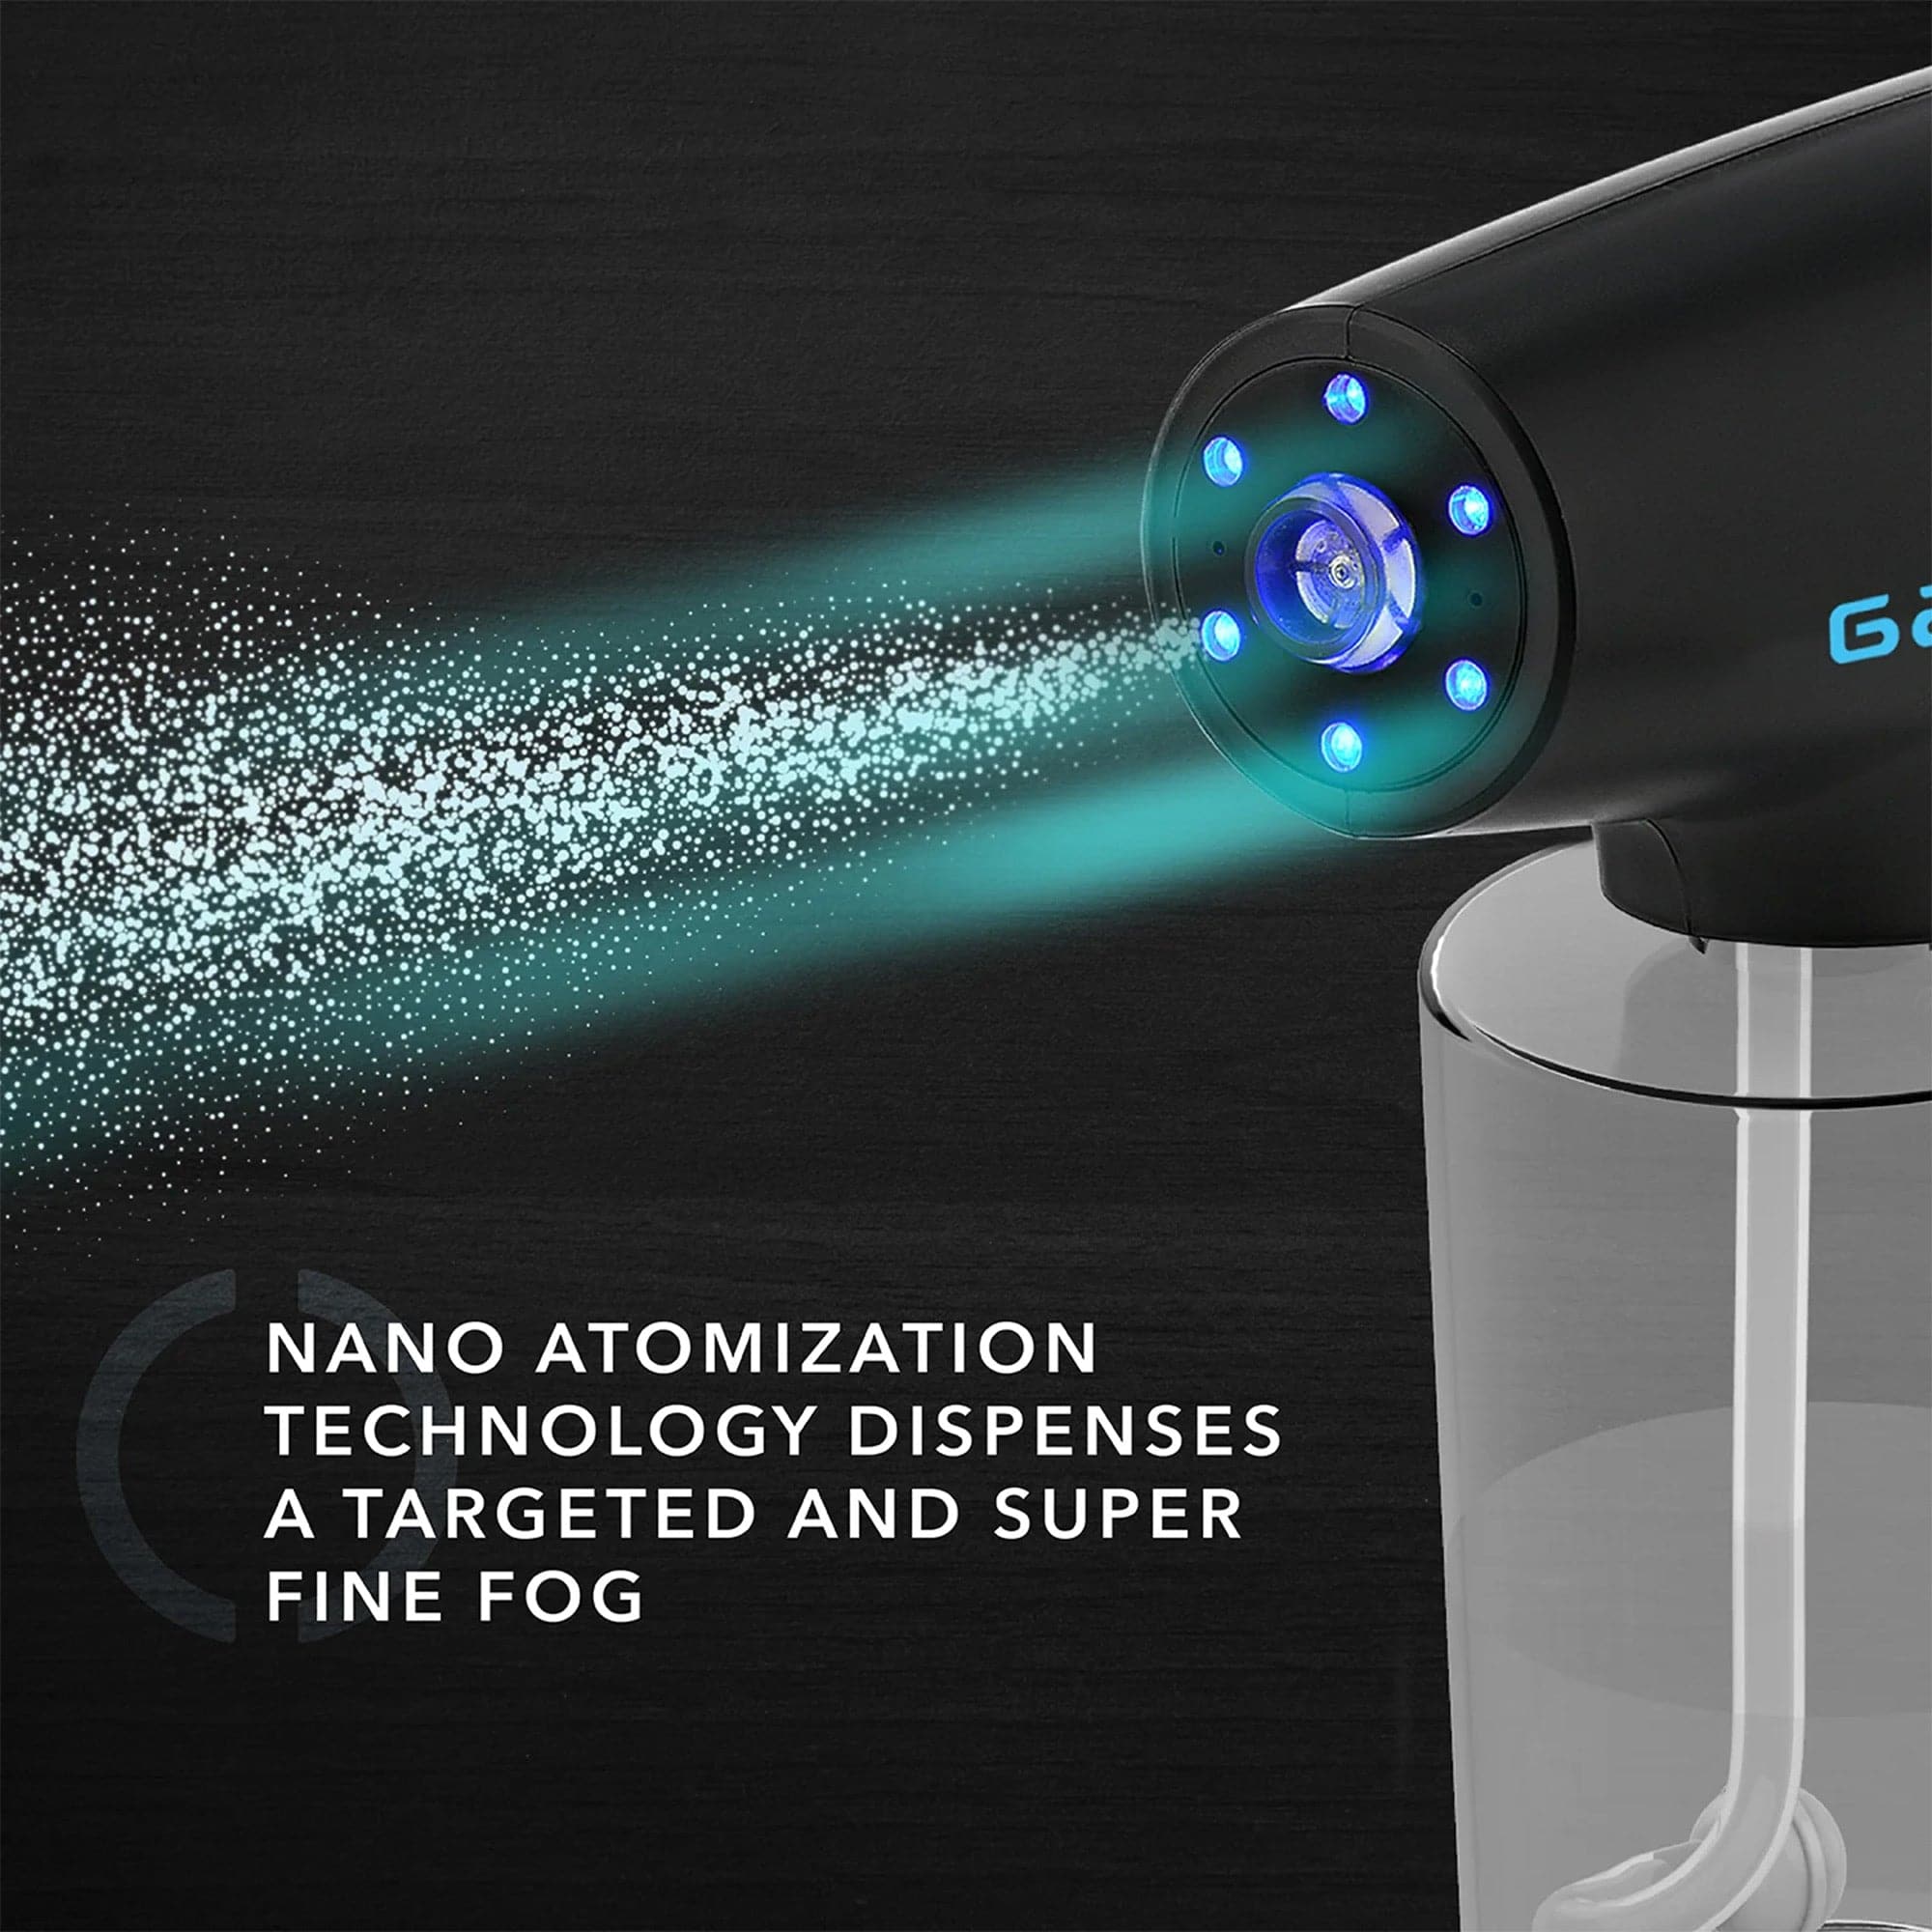 Gamma+ - Evo Nano Hair Water Spray Mister Black